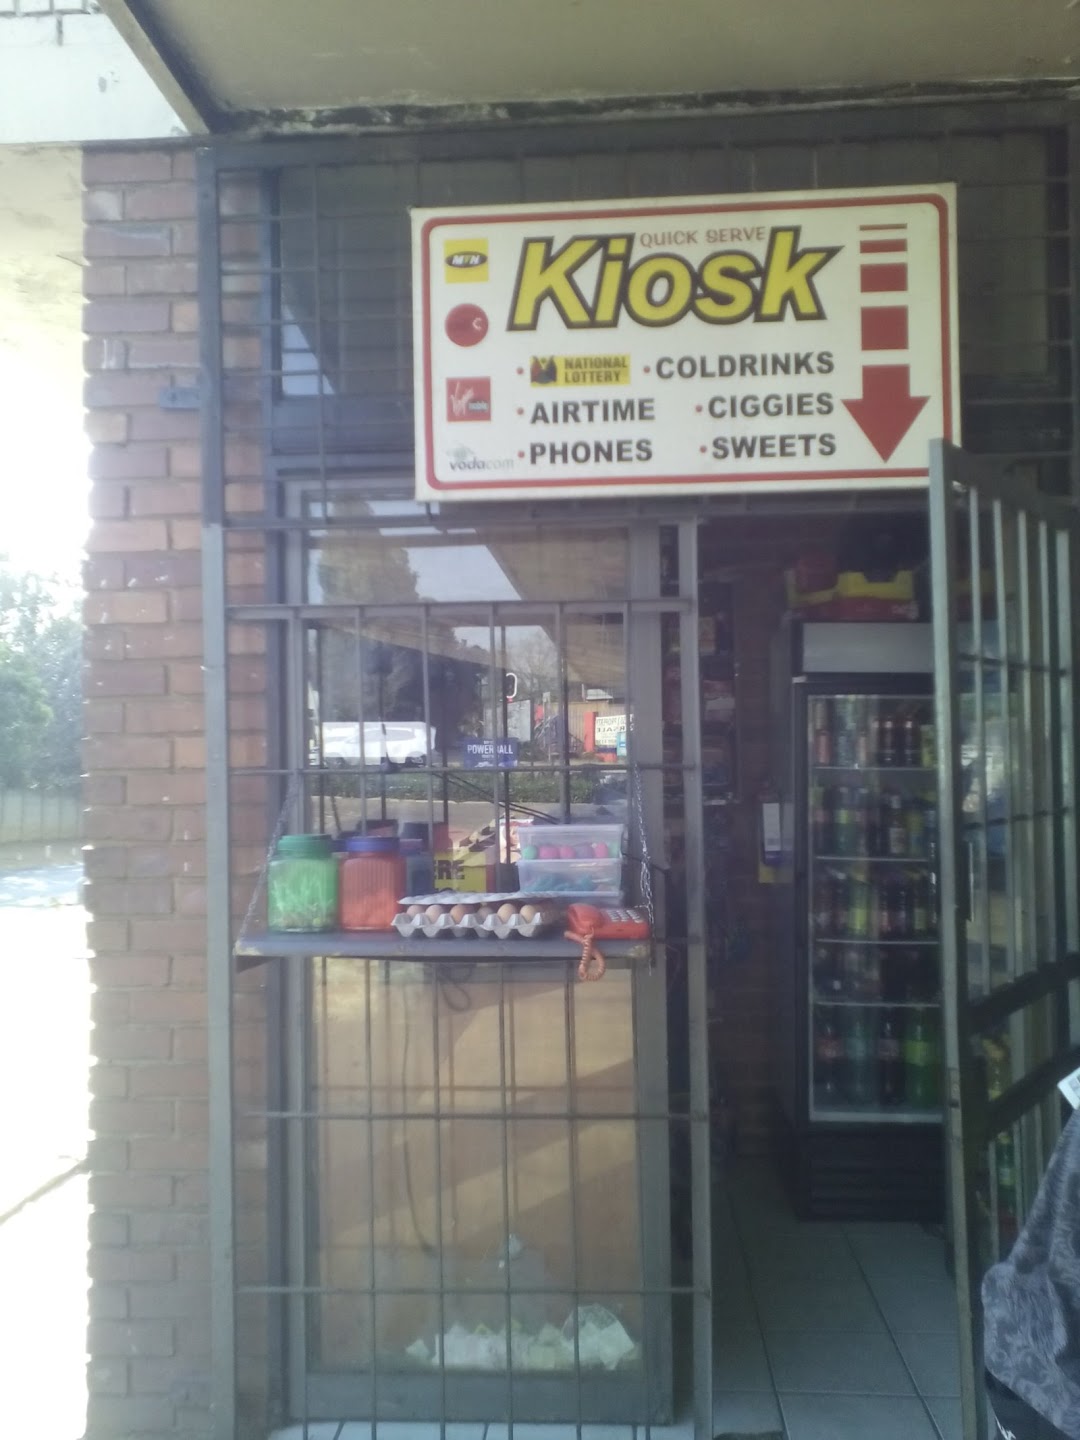 Quick Serve Kiosk